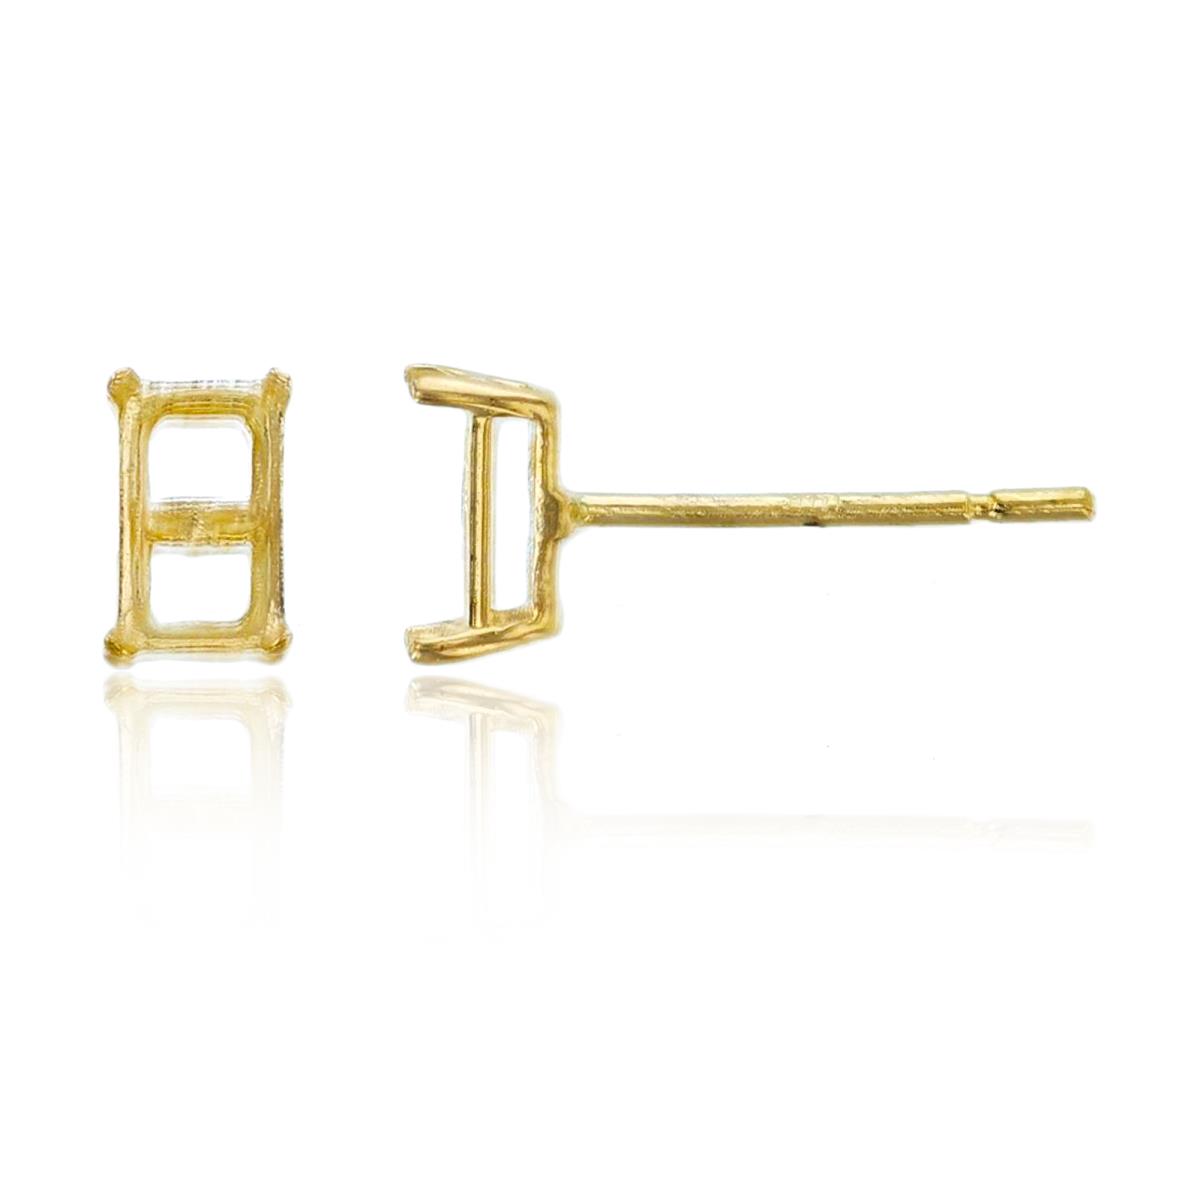 10K Yellow Gold 5x3mm Octagon Basket Stud Earrings-1PR. No stones.